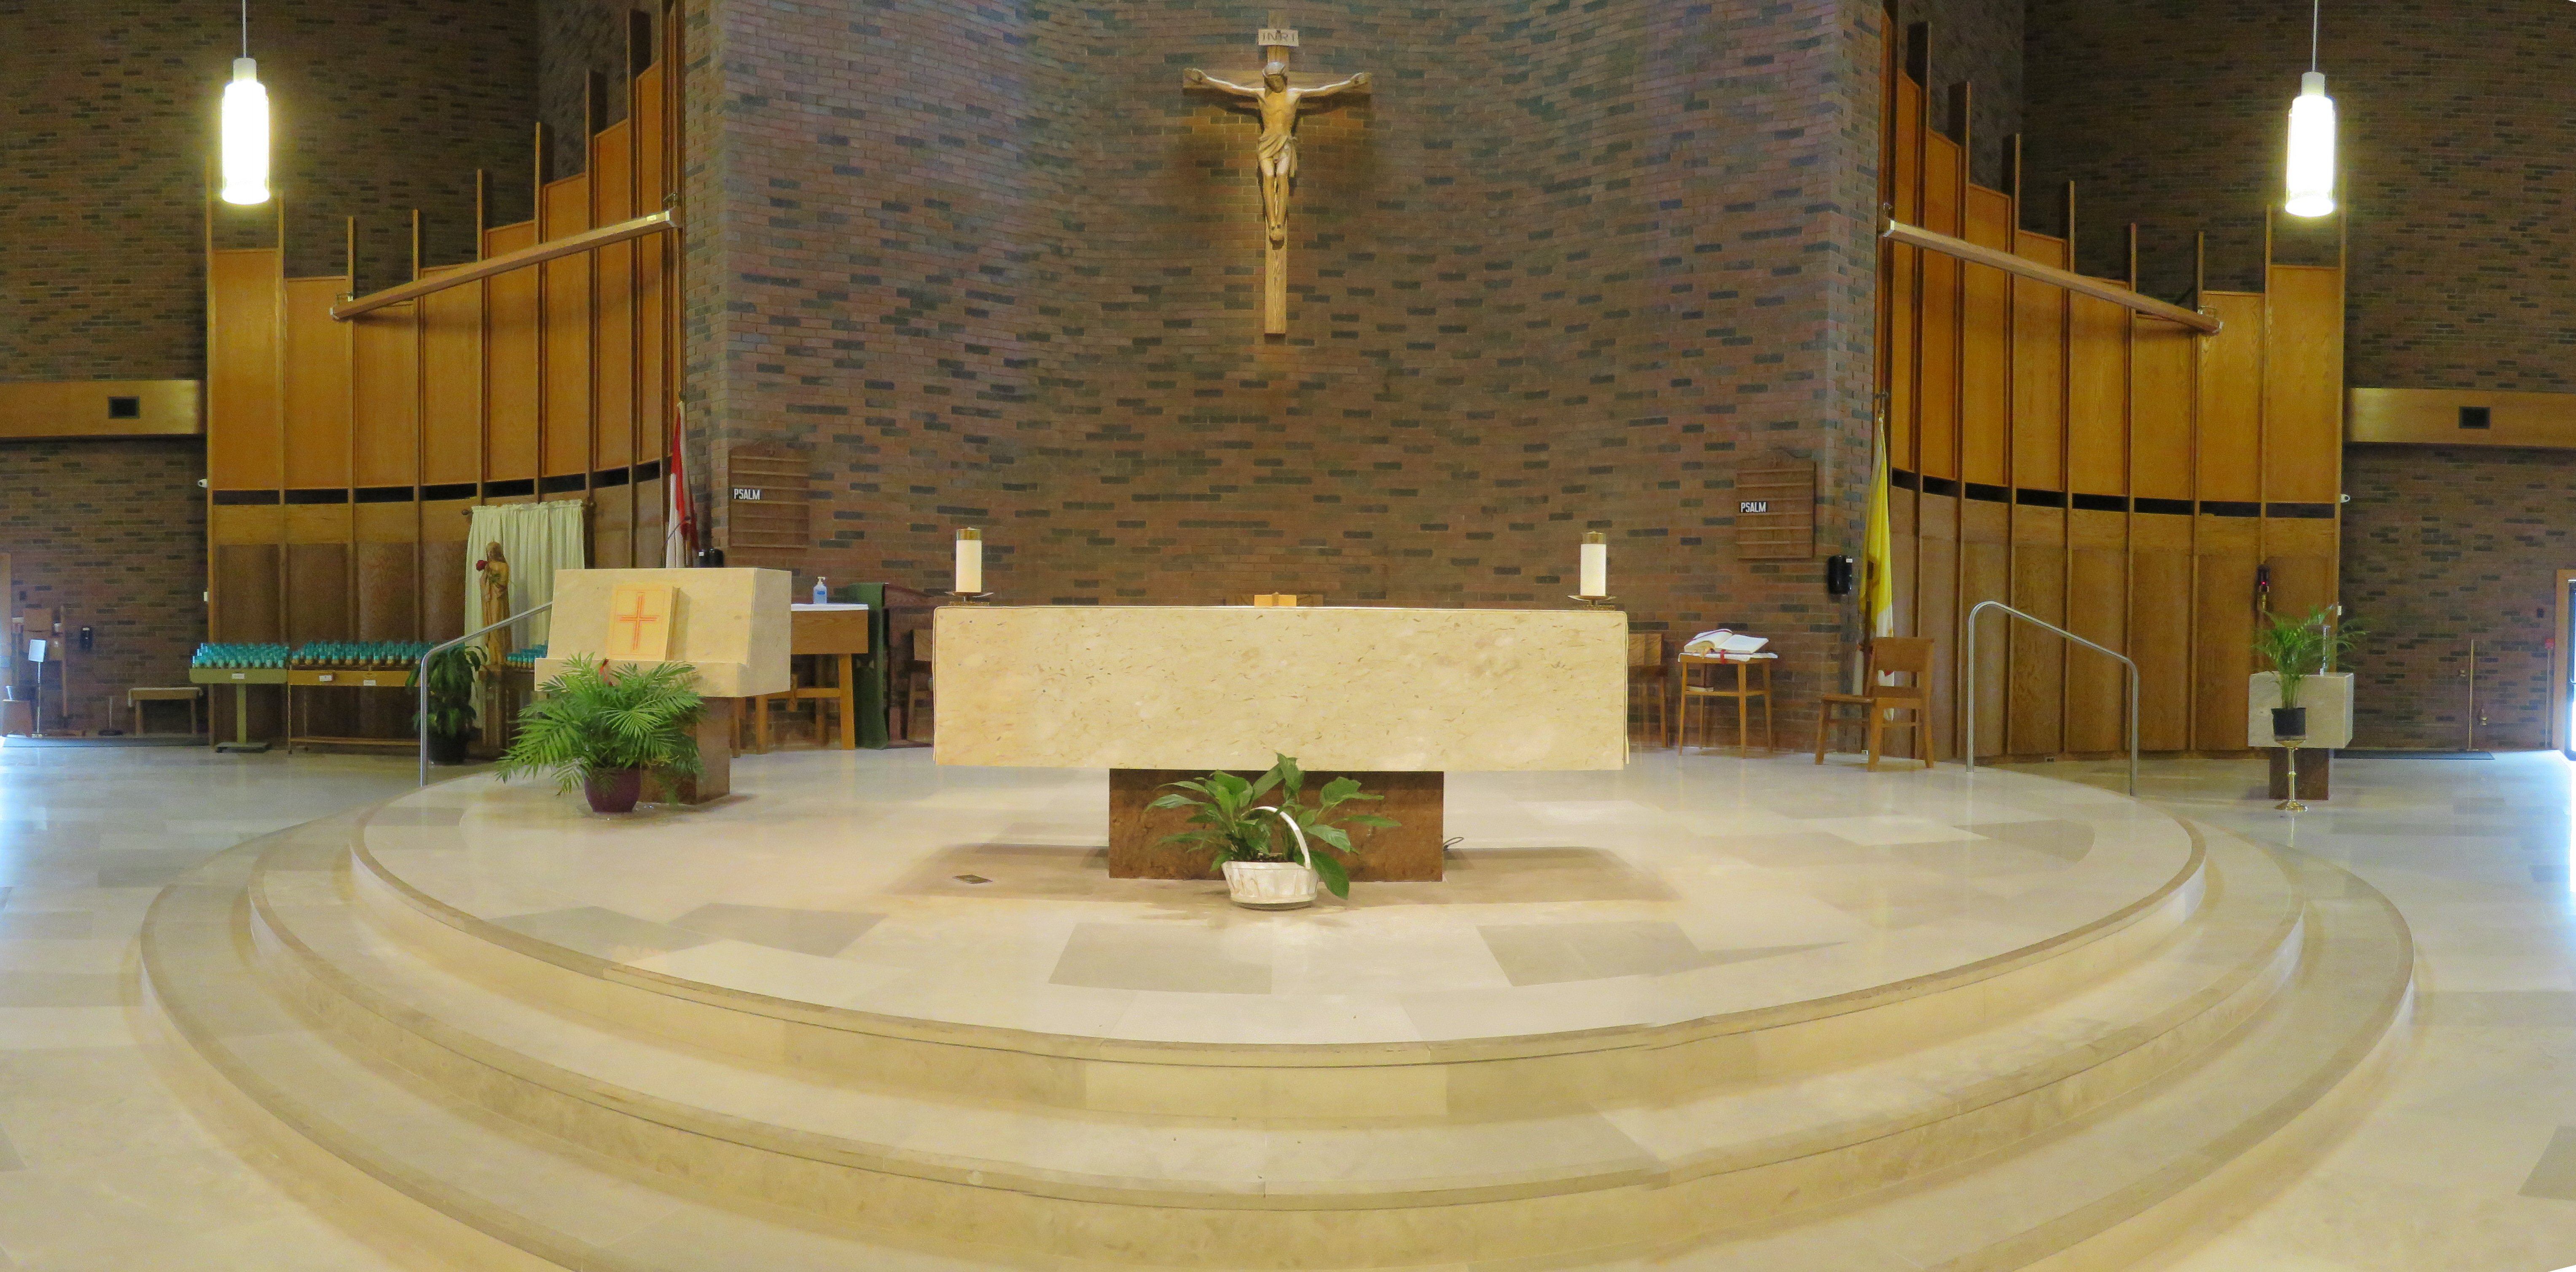 St. Mary's Interior of Church